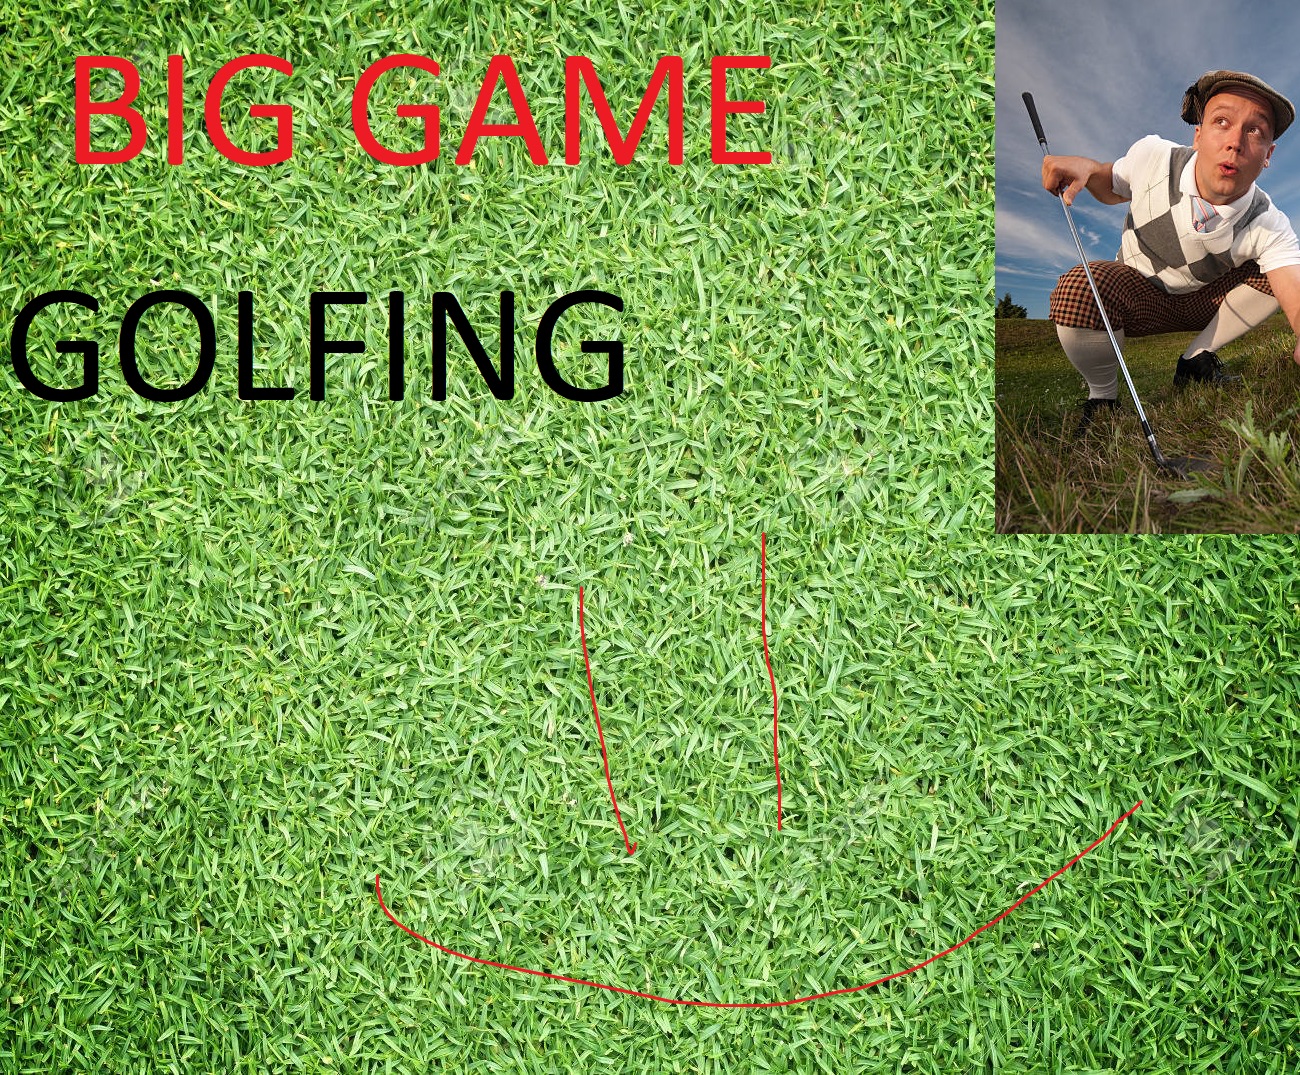 Big Game Golf